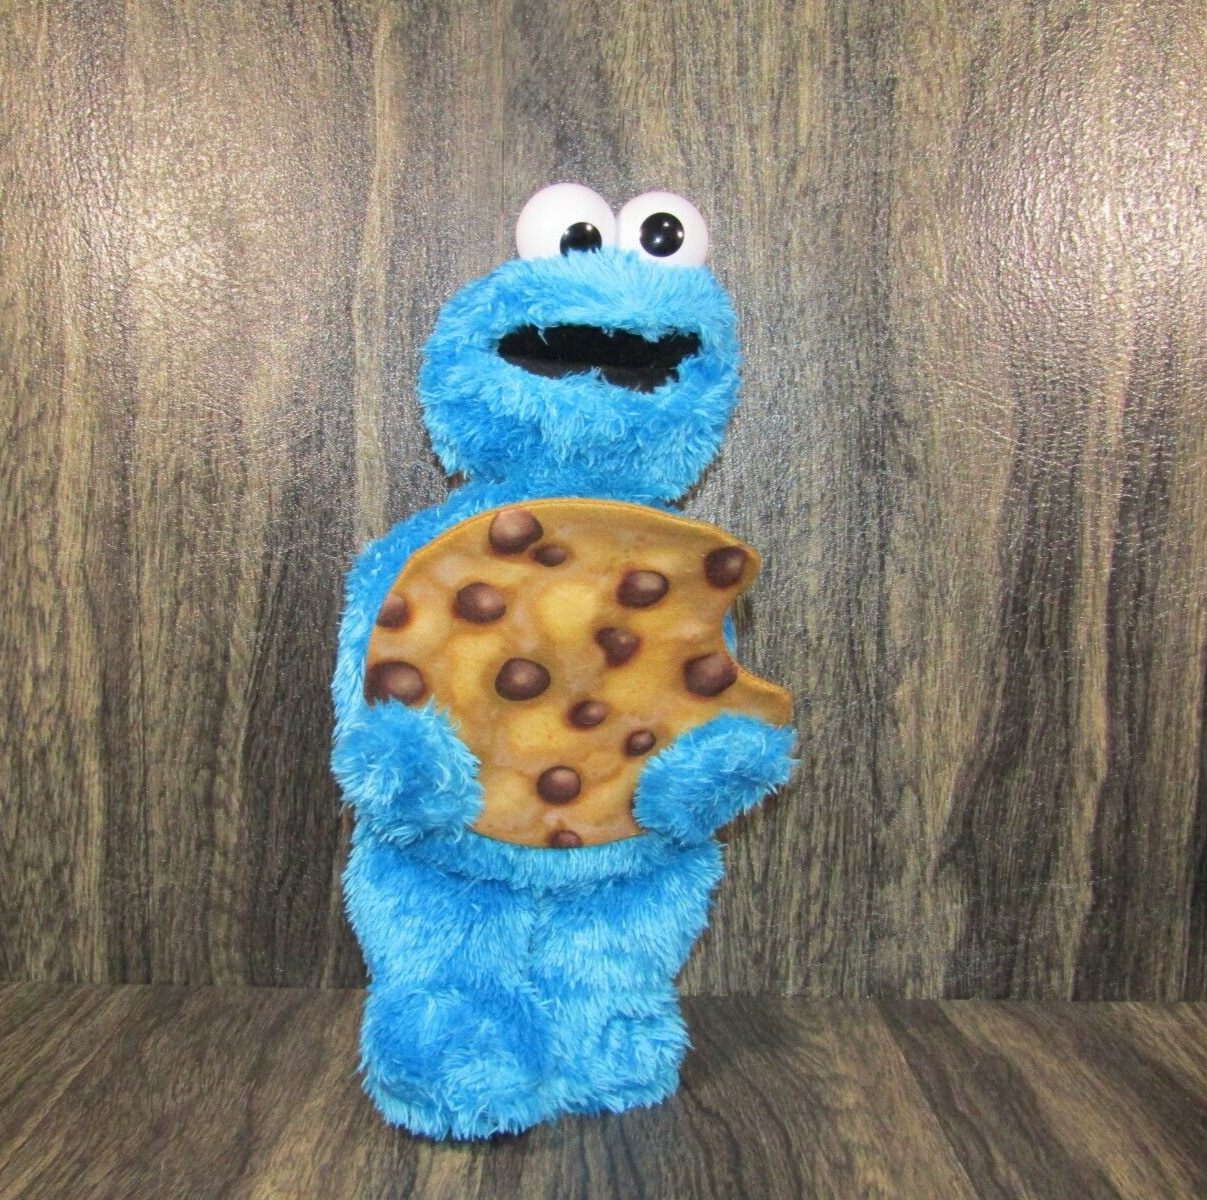 2020 Cookie Monster Peekaboo 14" Electric Plush Toy Sesame Street Hasbro Tested - $12.86